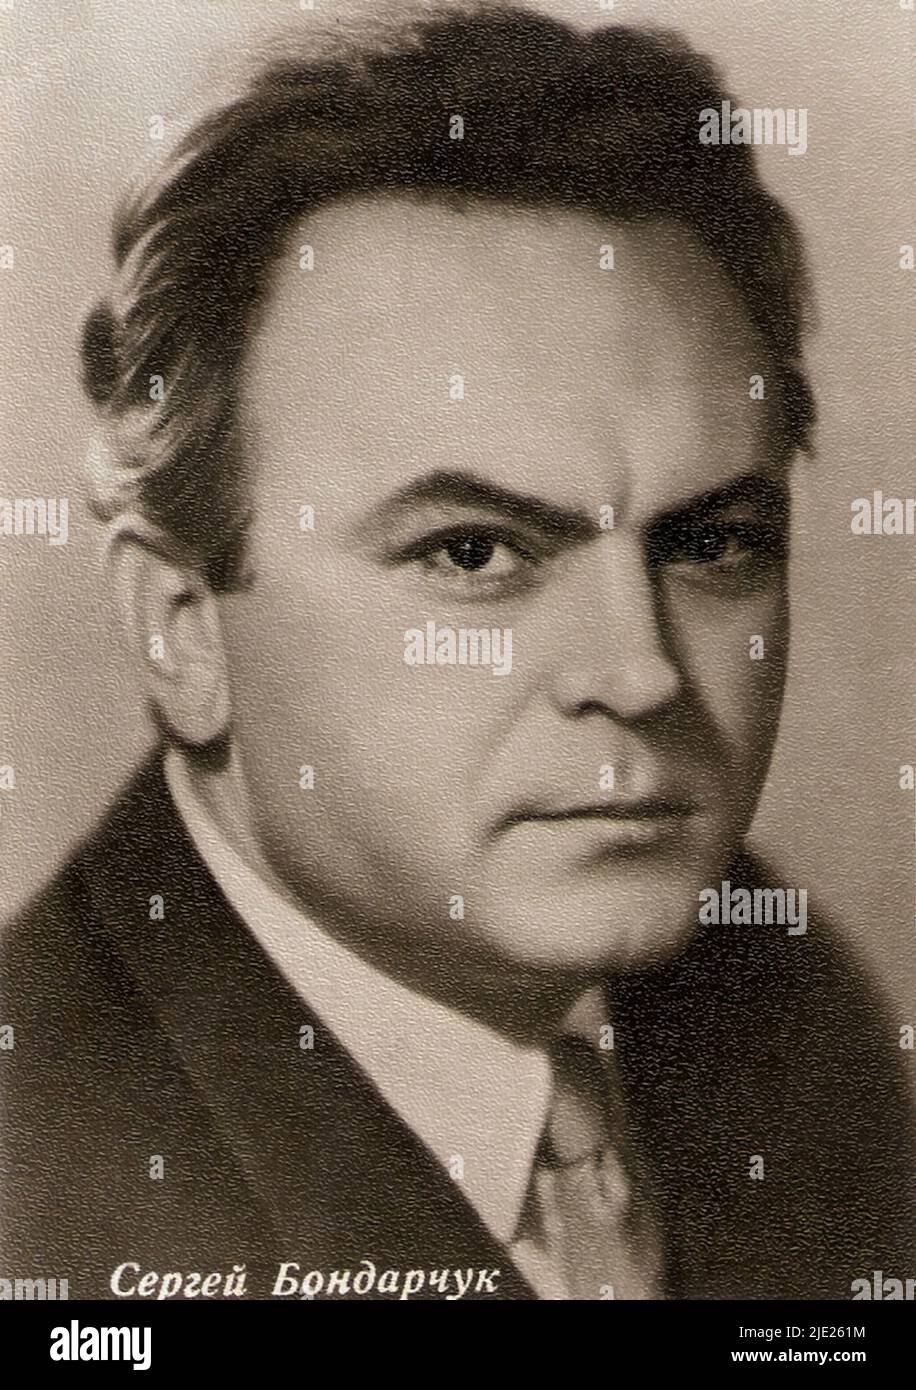 Portrait of Sergey Bondarchuk Stock Photo